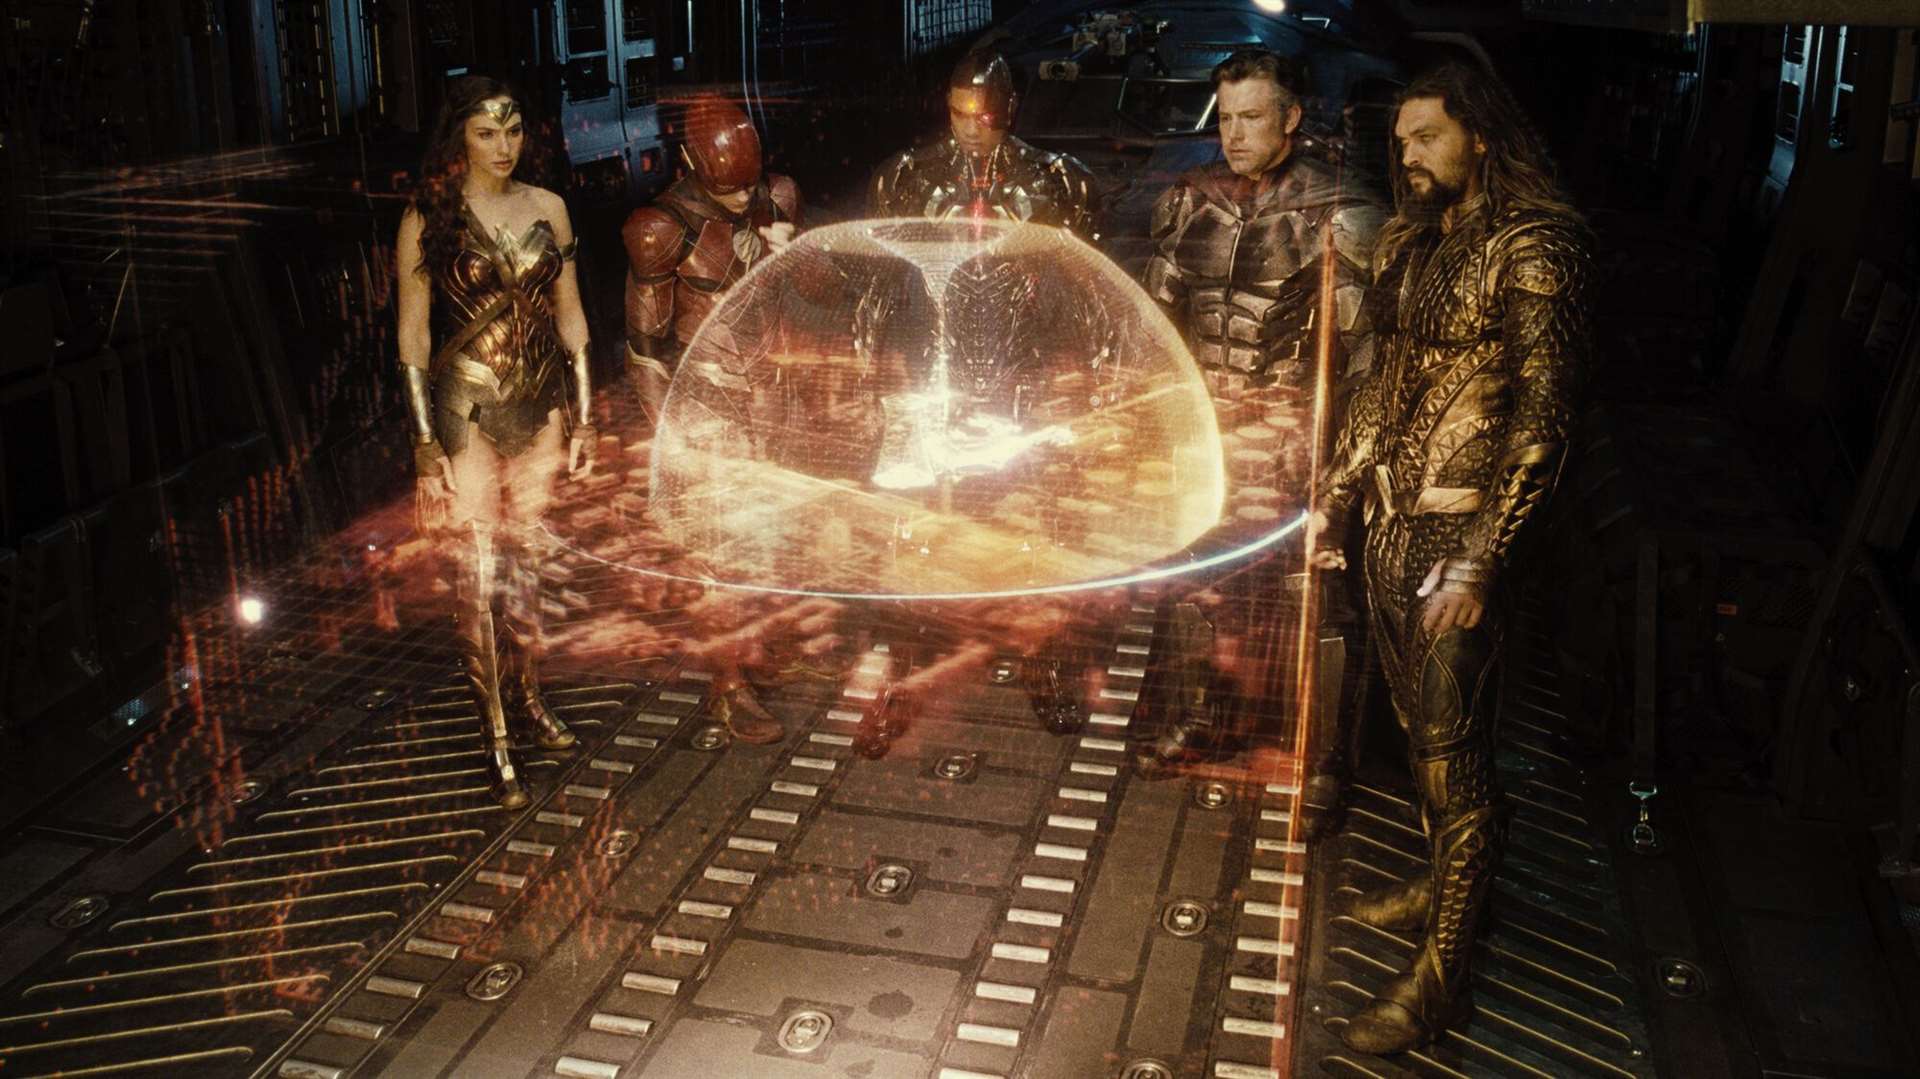 Gal Gadot as Wonder Woman, Ezra Miller as The Flash, Ray Fisher as Cyborg, Ben Affleck as Batman and Jason Momoa as Aquaman. Picture: PA Photo/Warner Bros. Entertainment Inc./DC Comics, Inc.